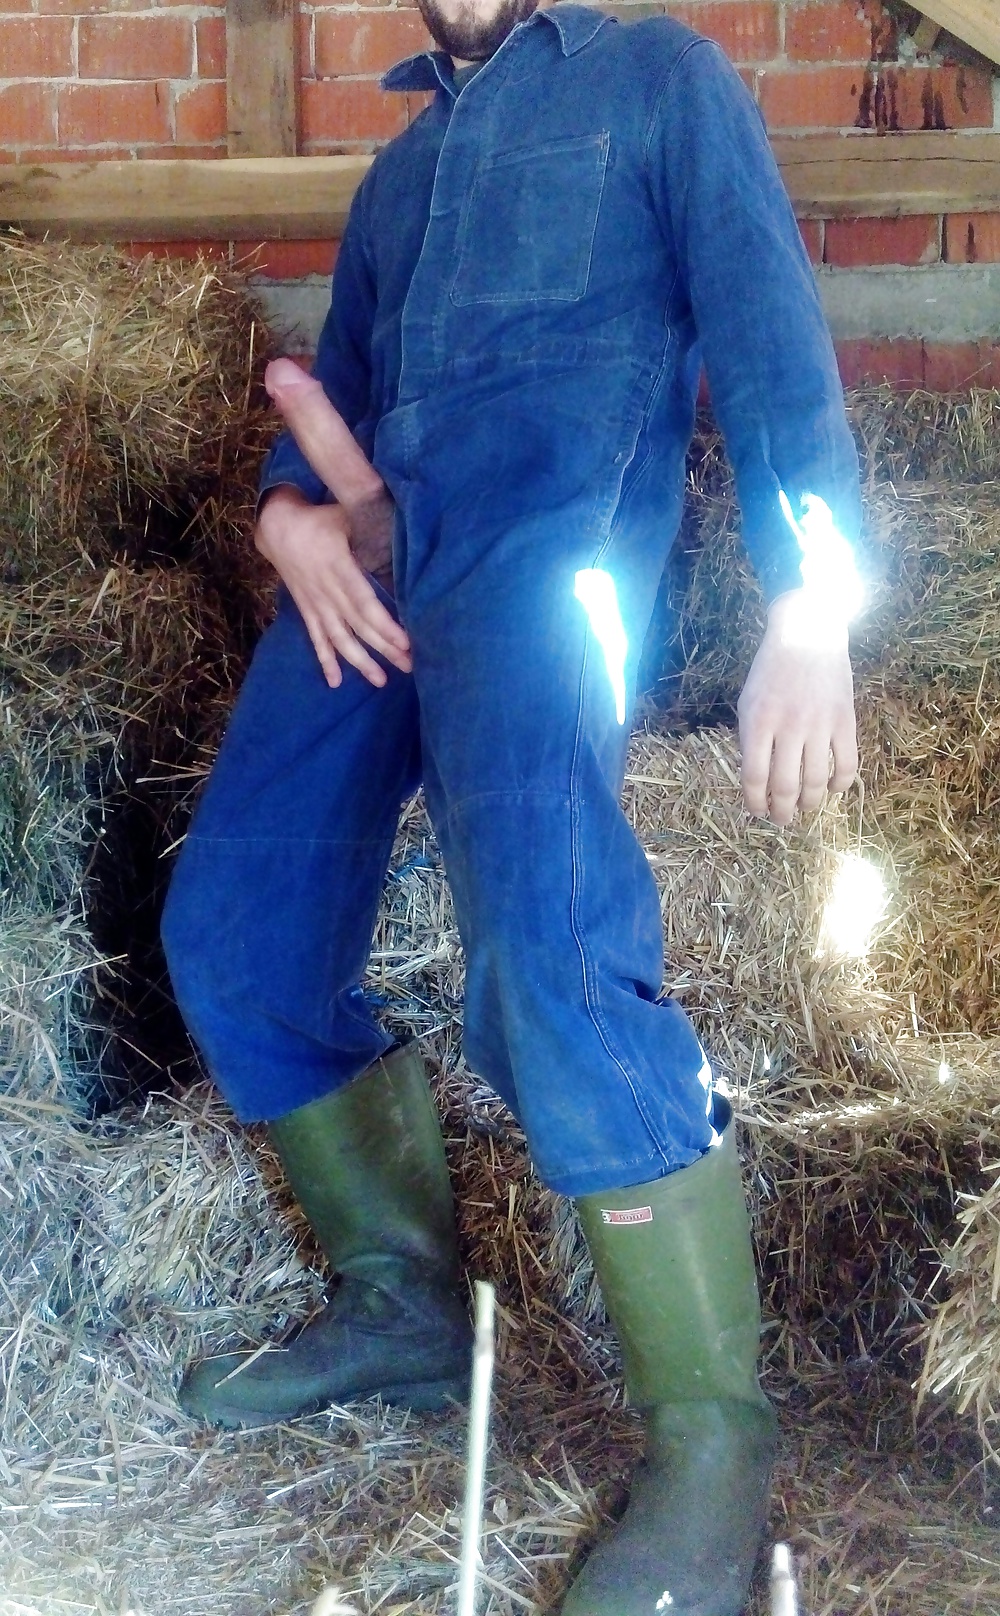 Farmer jerking off dick on hay (12/13)